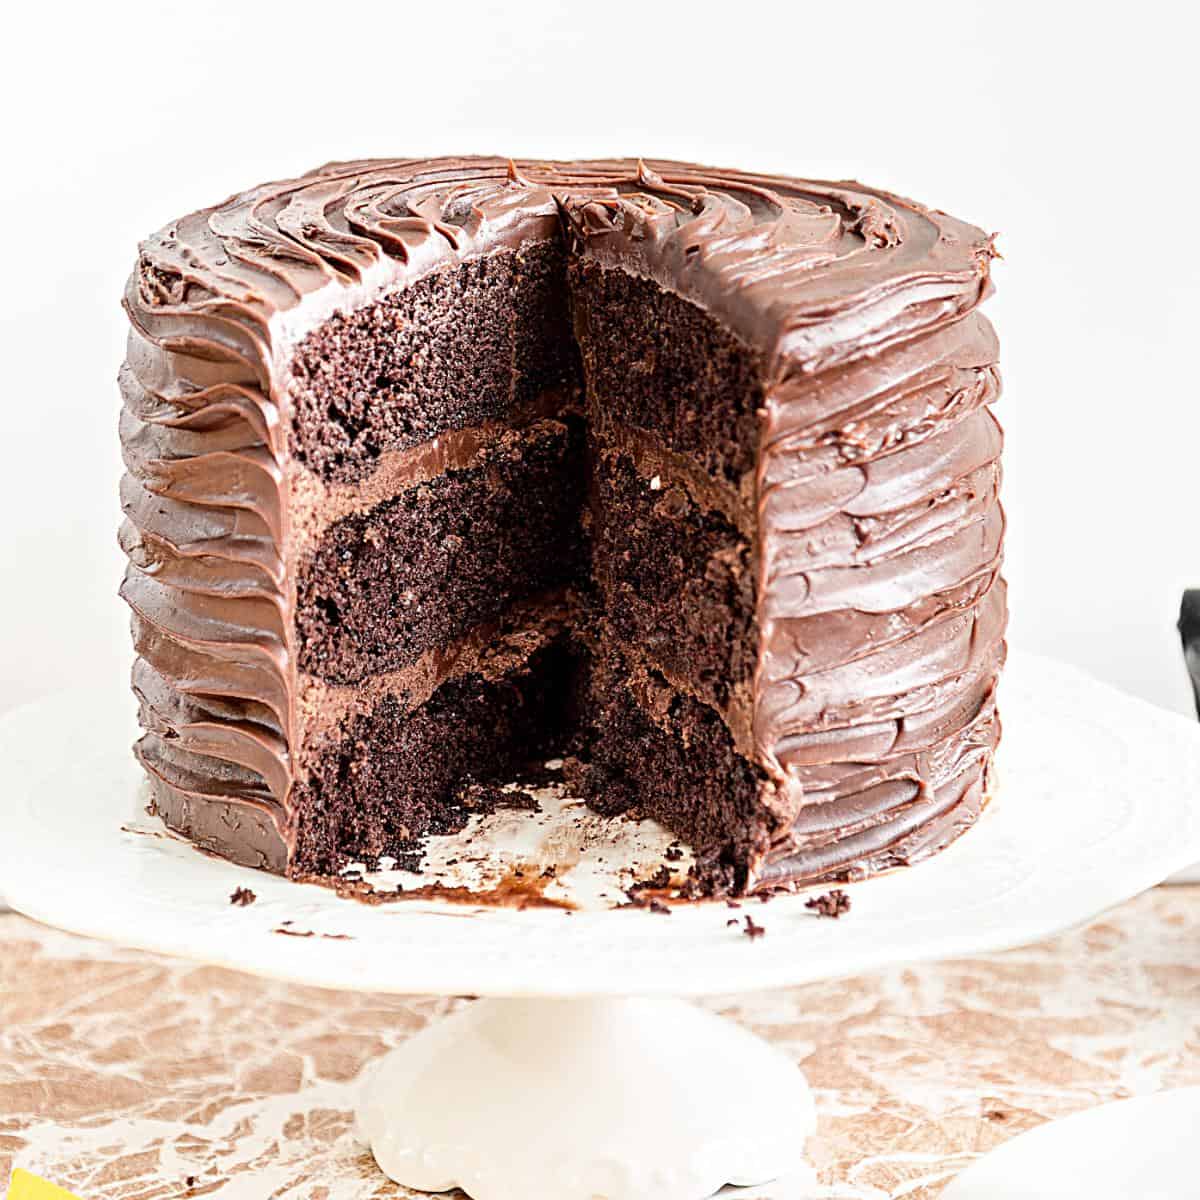 A sliced chocolate cake on the cake stand.